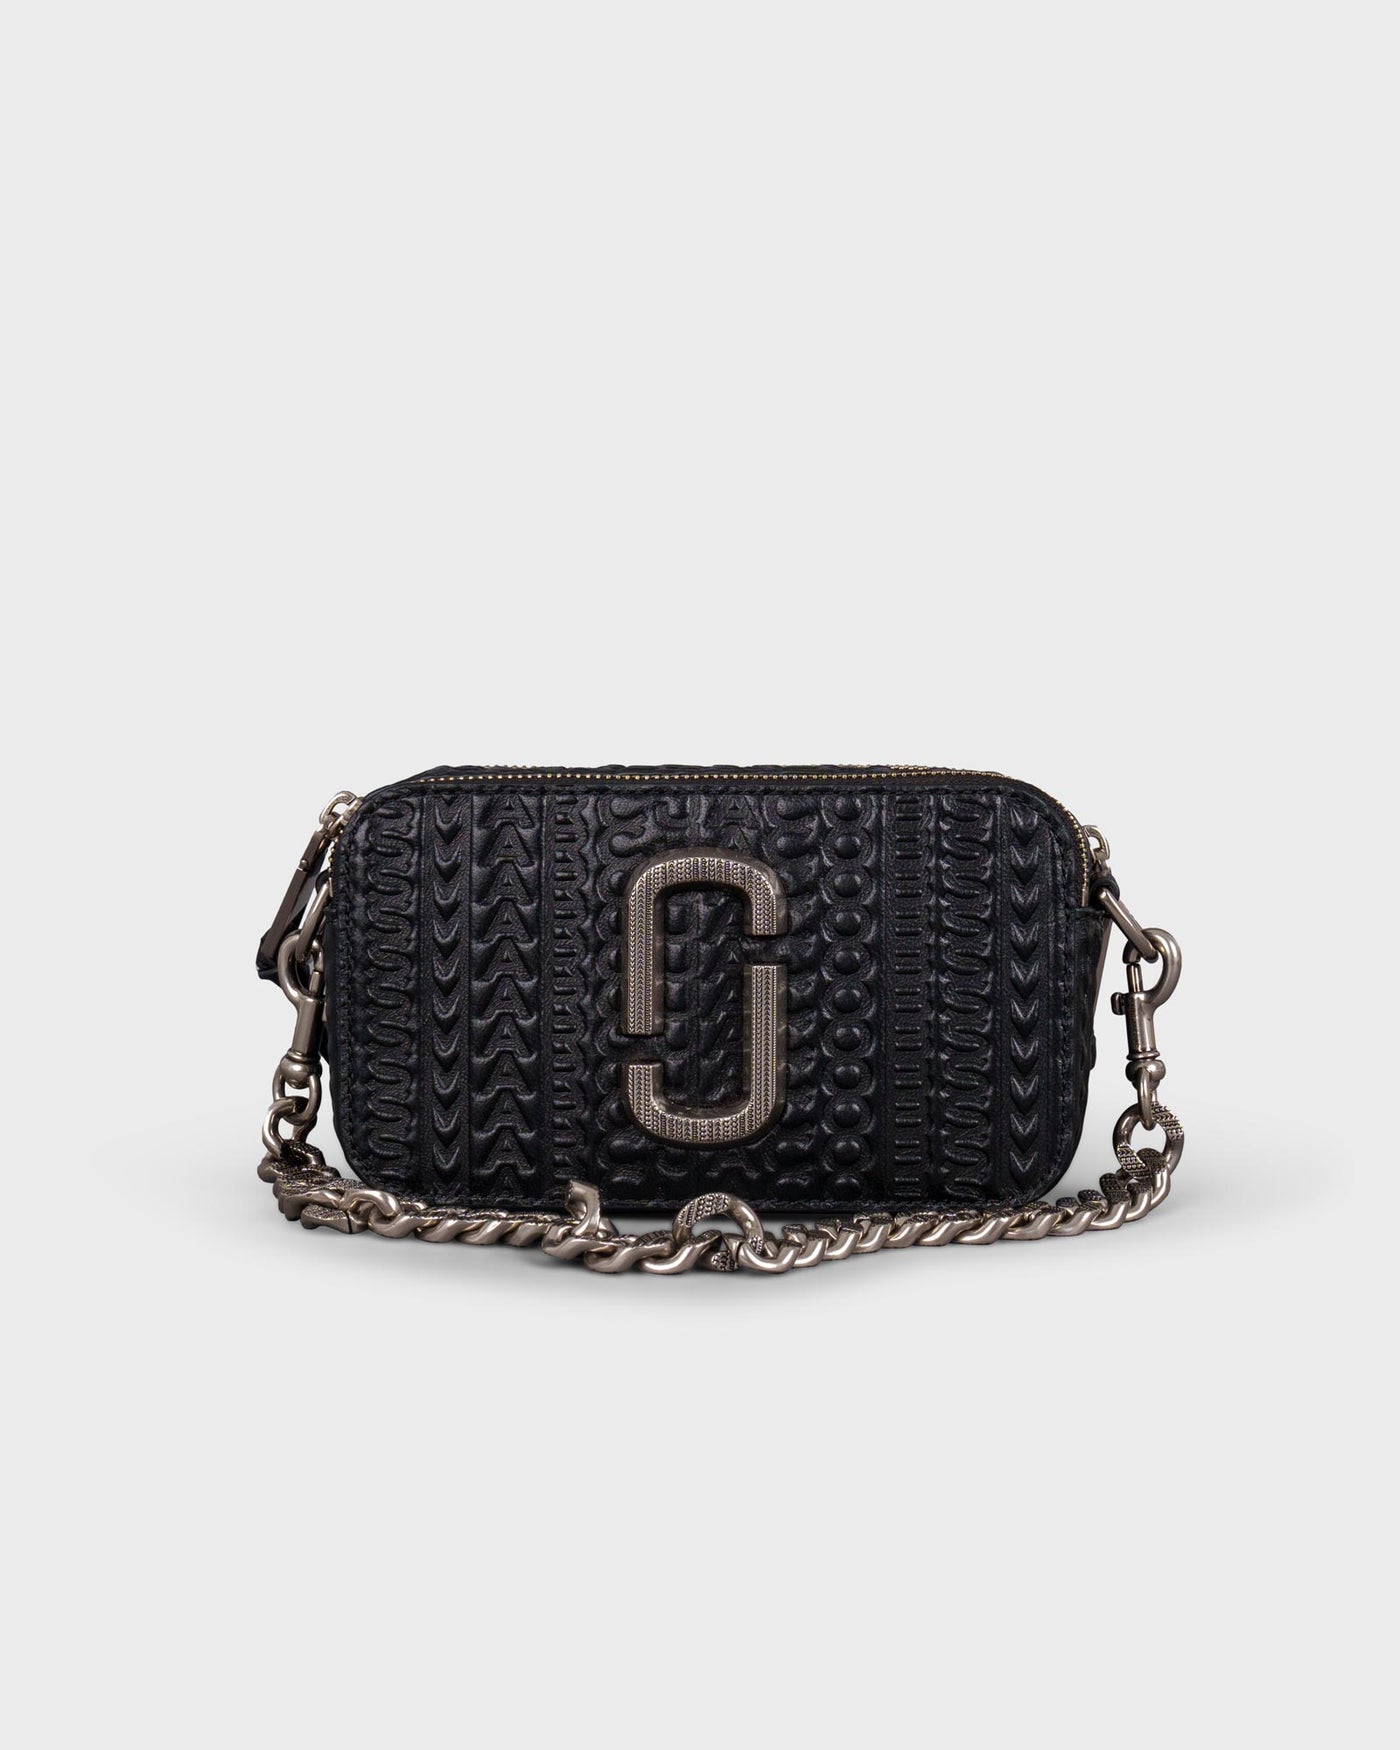 The Monogram Leather Snapshot DTM Black myMEID